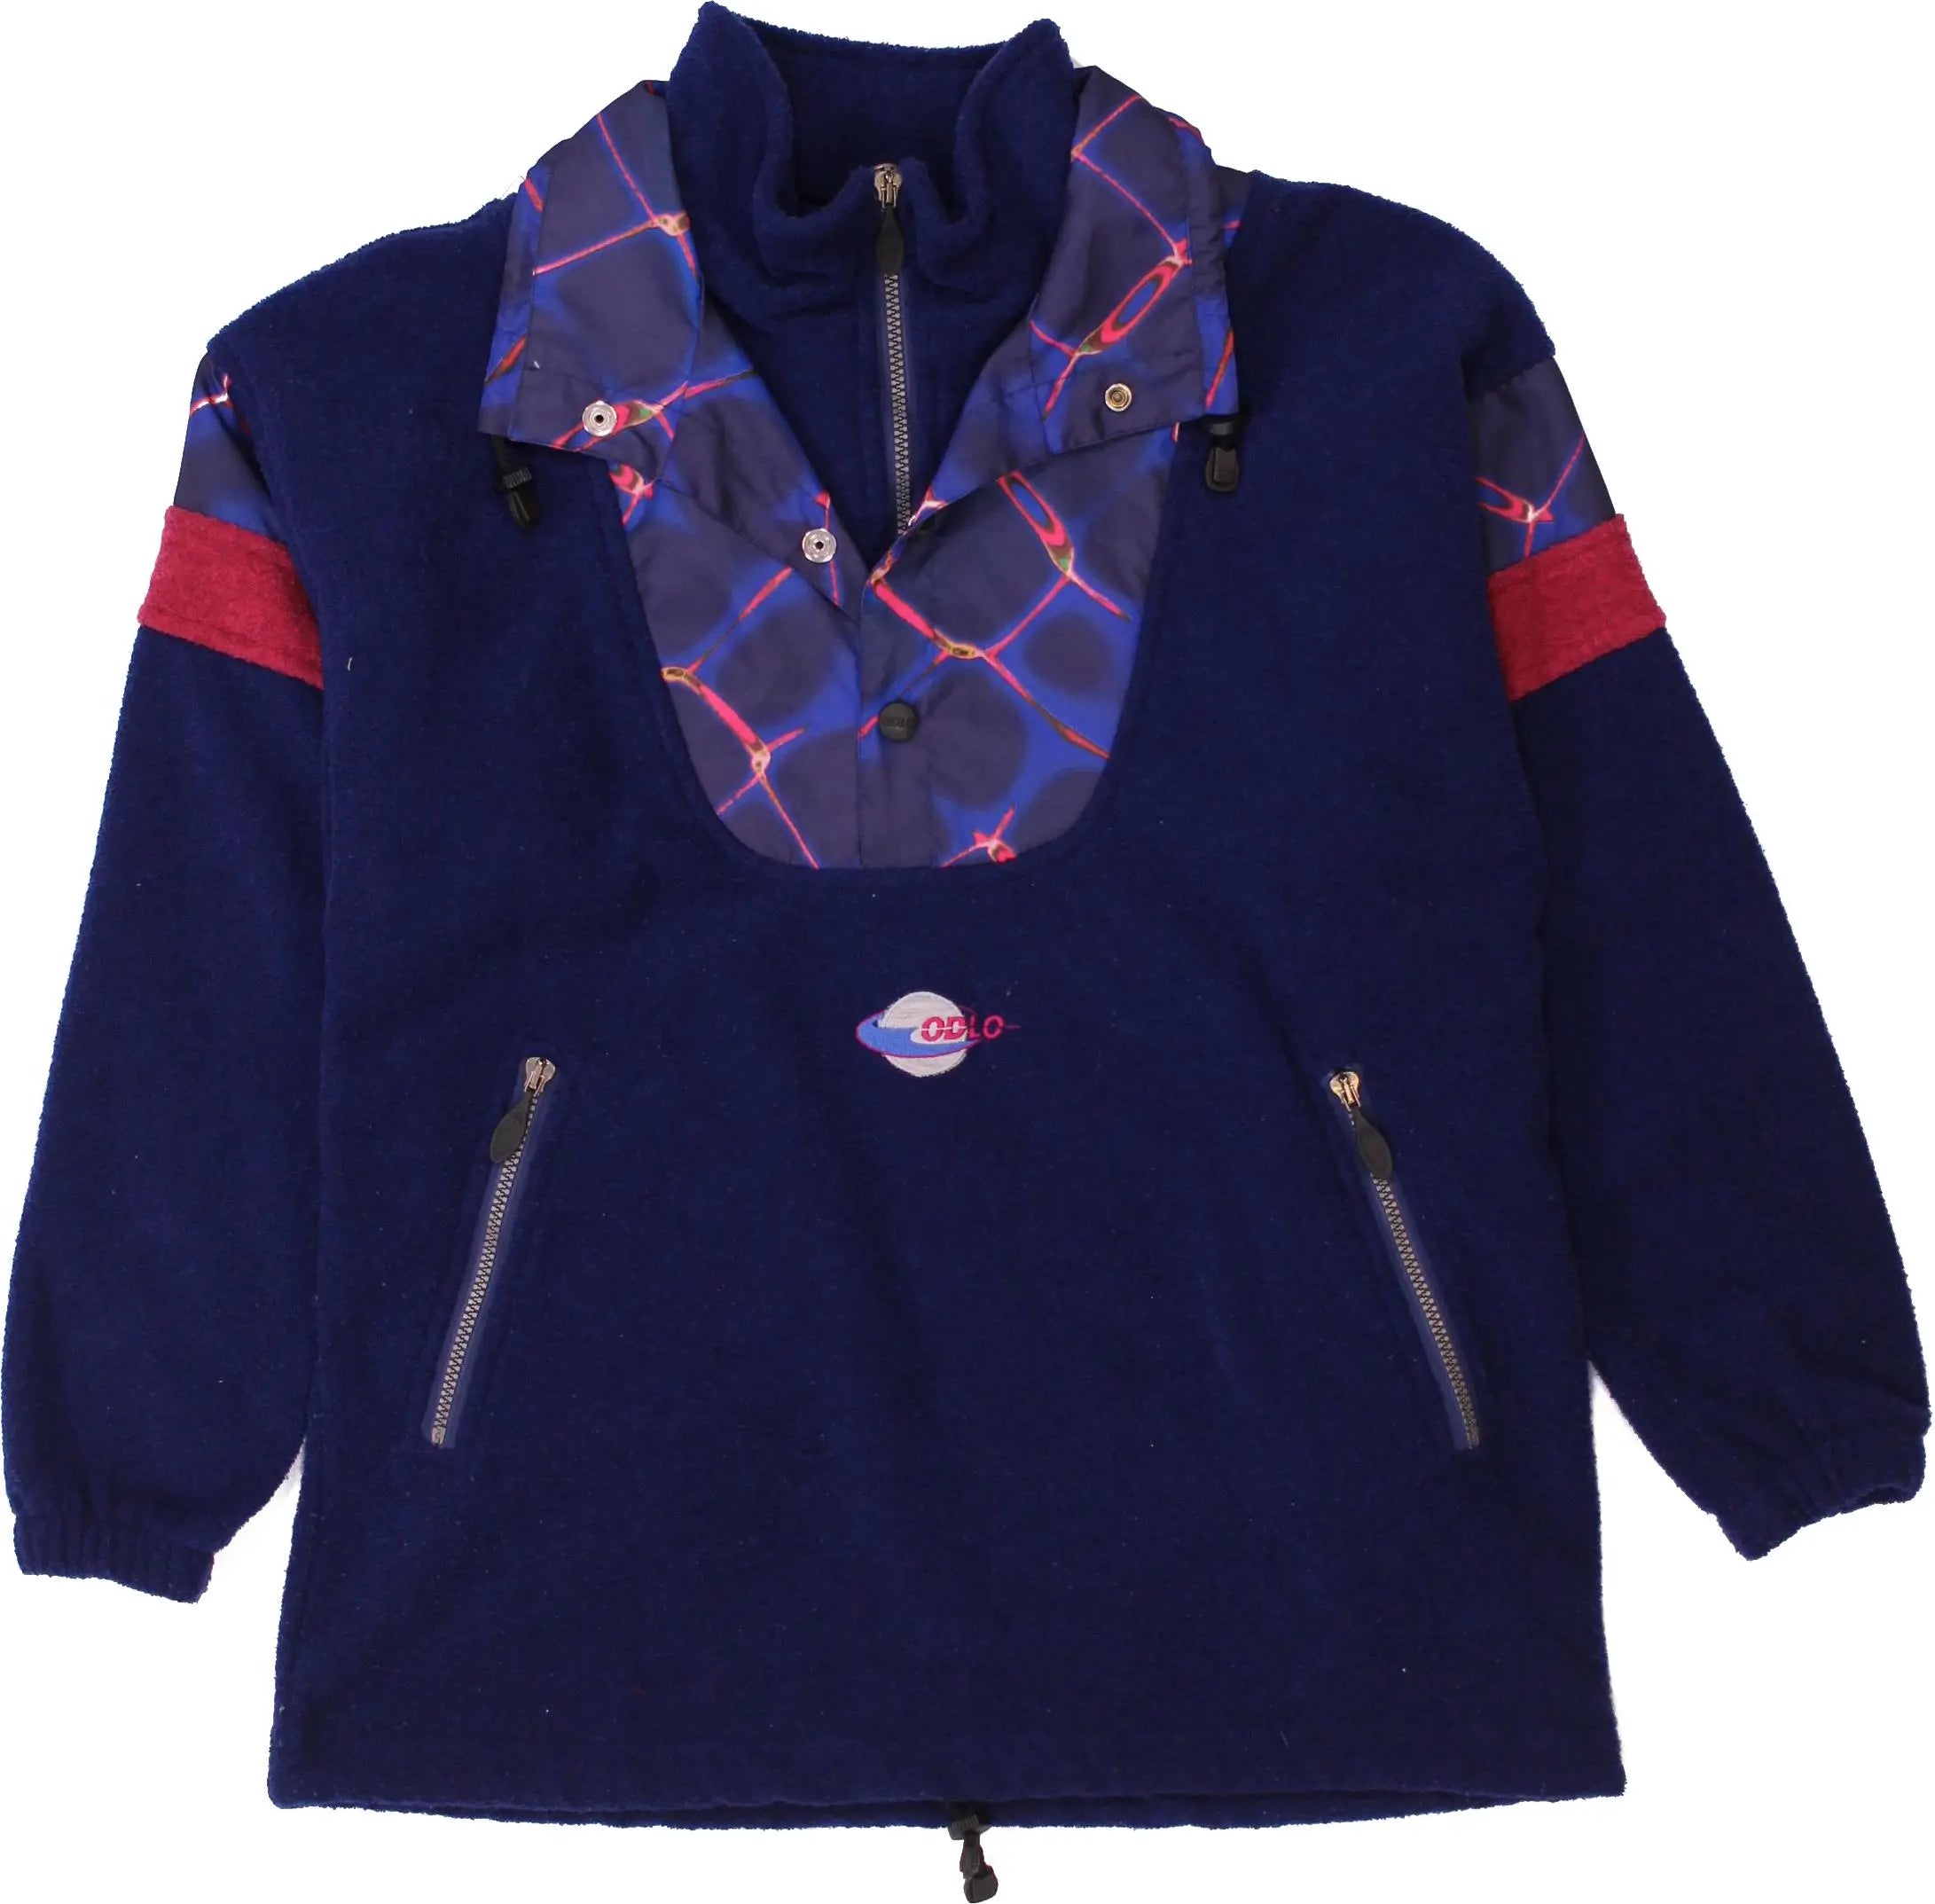 Odlo - 90s Odlo Fleece Half Zip Sweatshirt- ThriftTale.com - Vintage and second handclothing